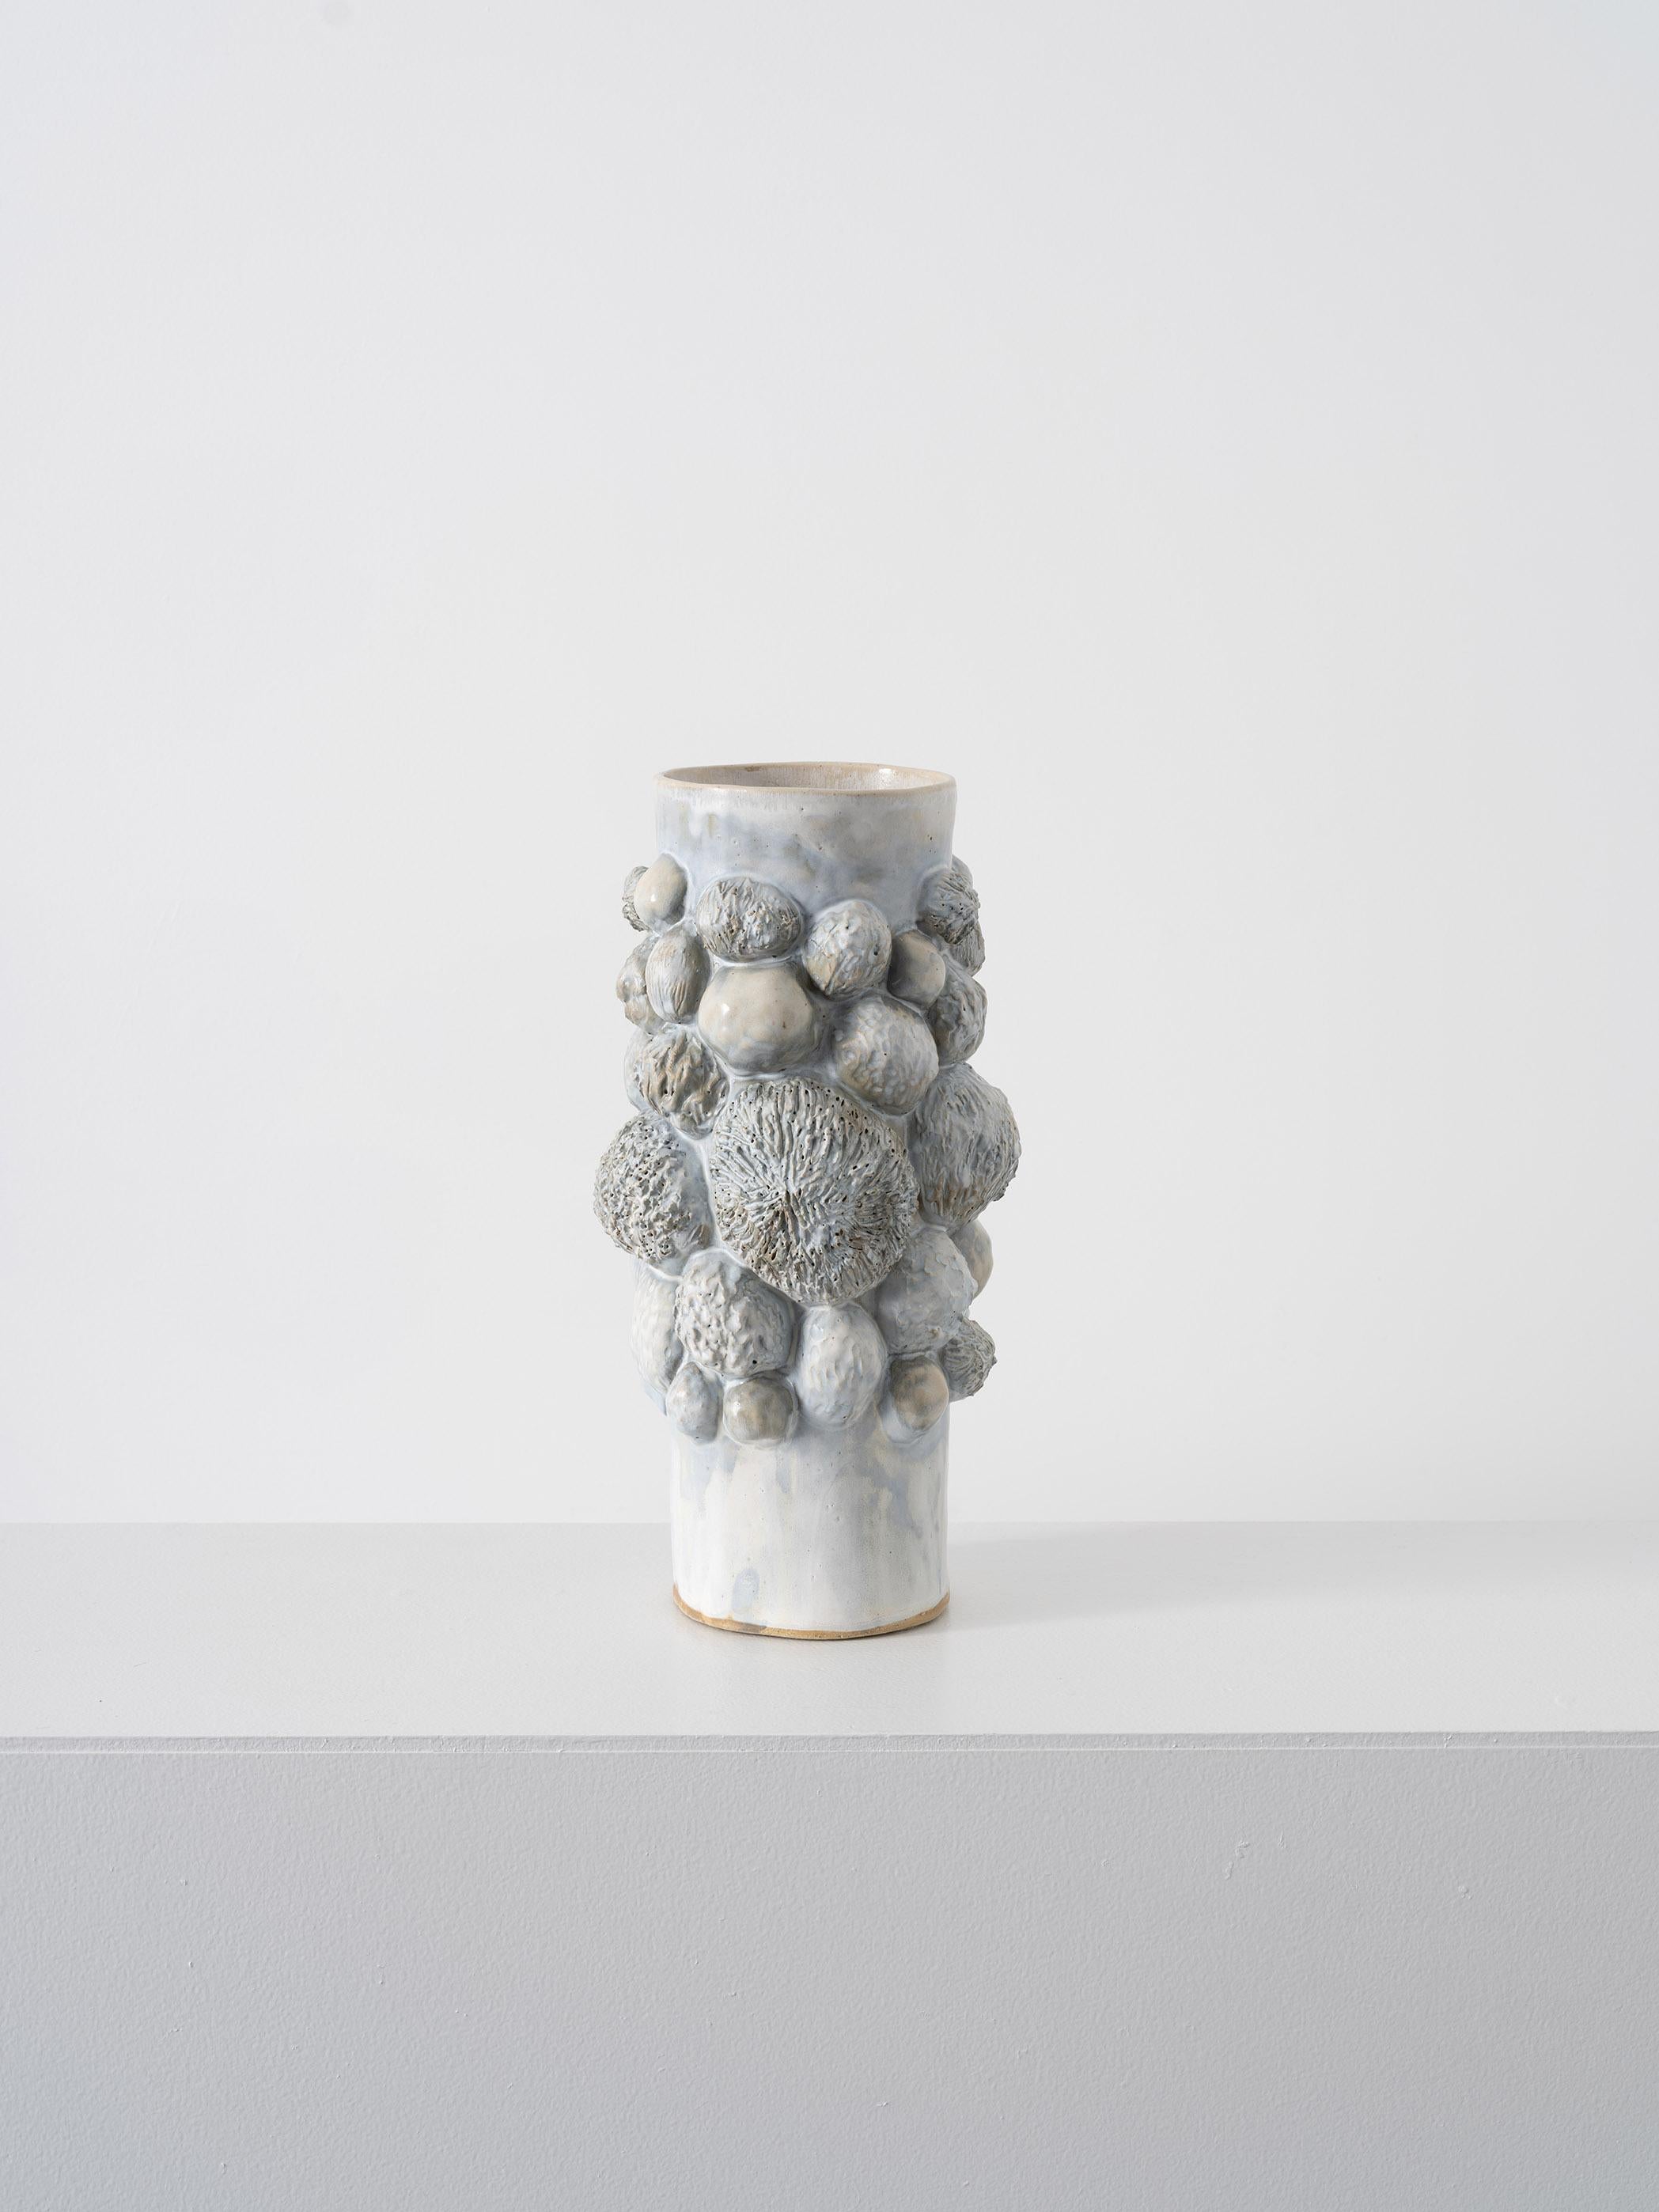 Trish DeMasi
Botanica Vessel, 2022
Glazed ceramic
6.5 x 6.5 x 14.5 in.